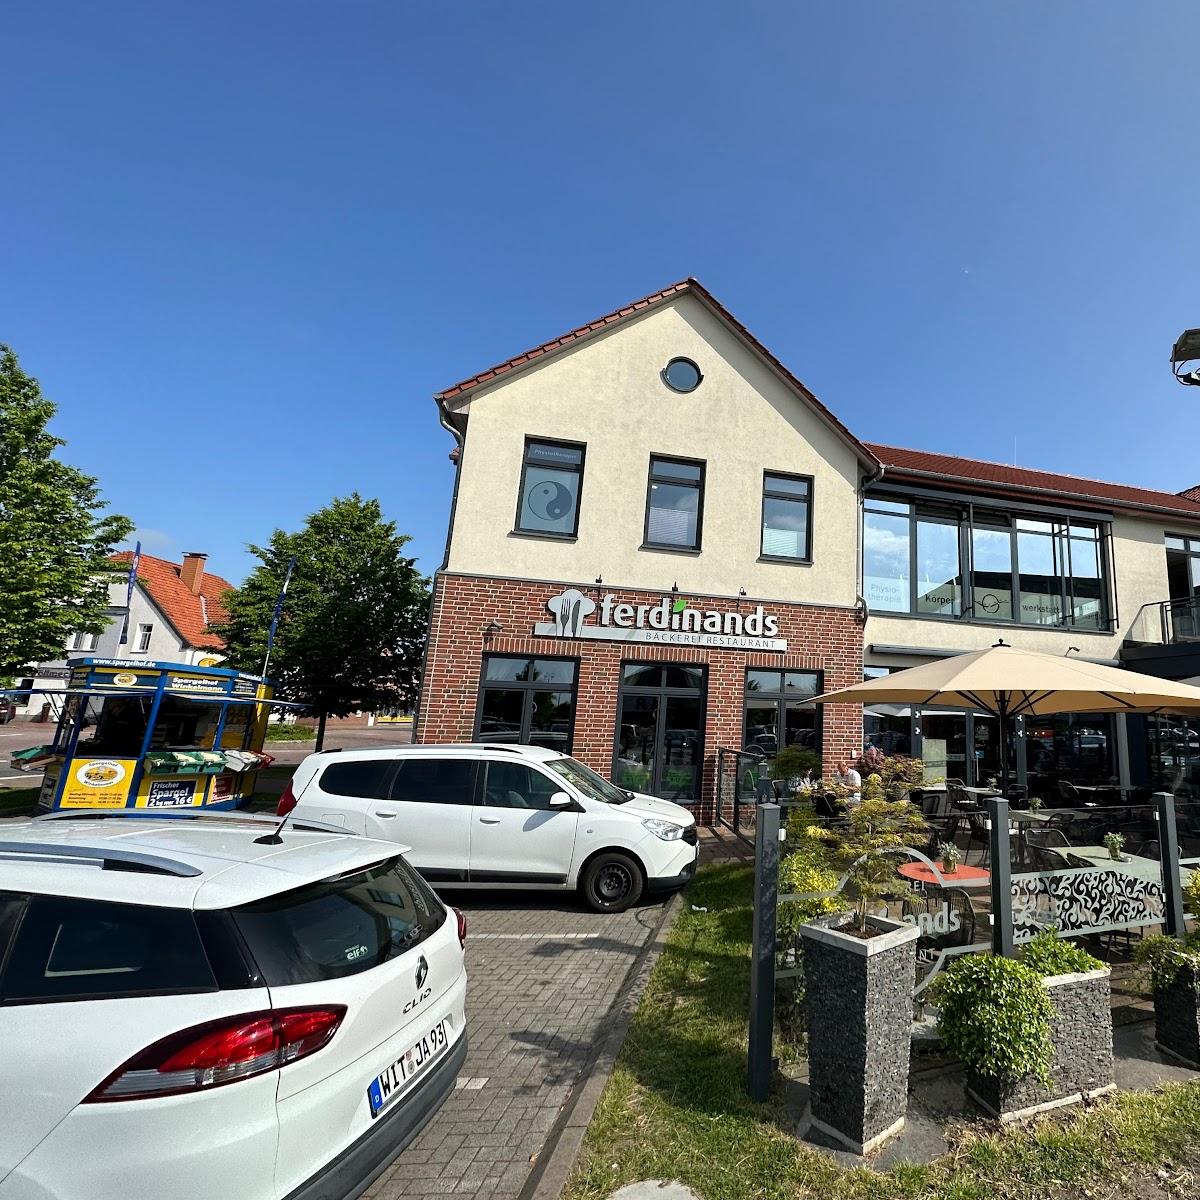 Restaurant "ferdinands | Bäckerei & Restaurant" in Petershagen